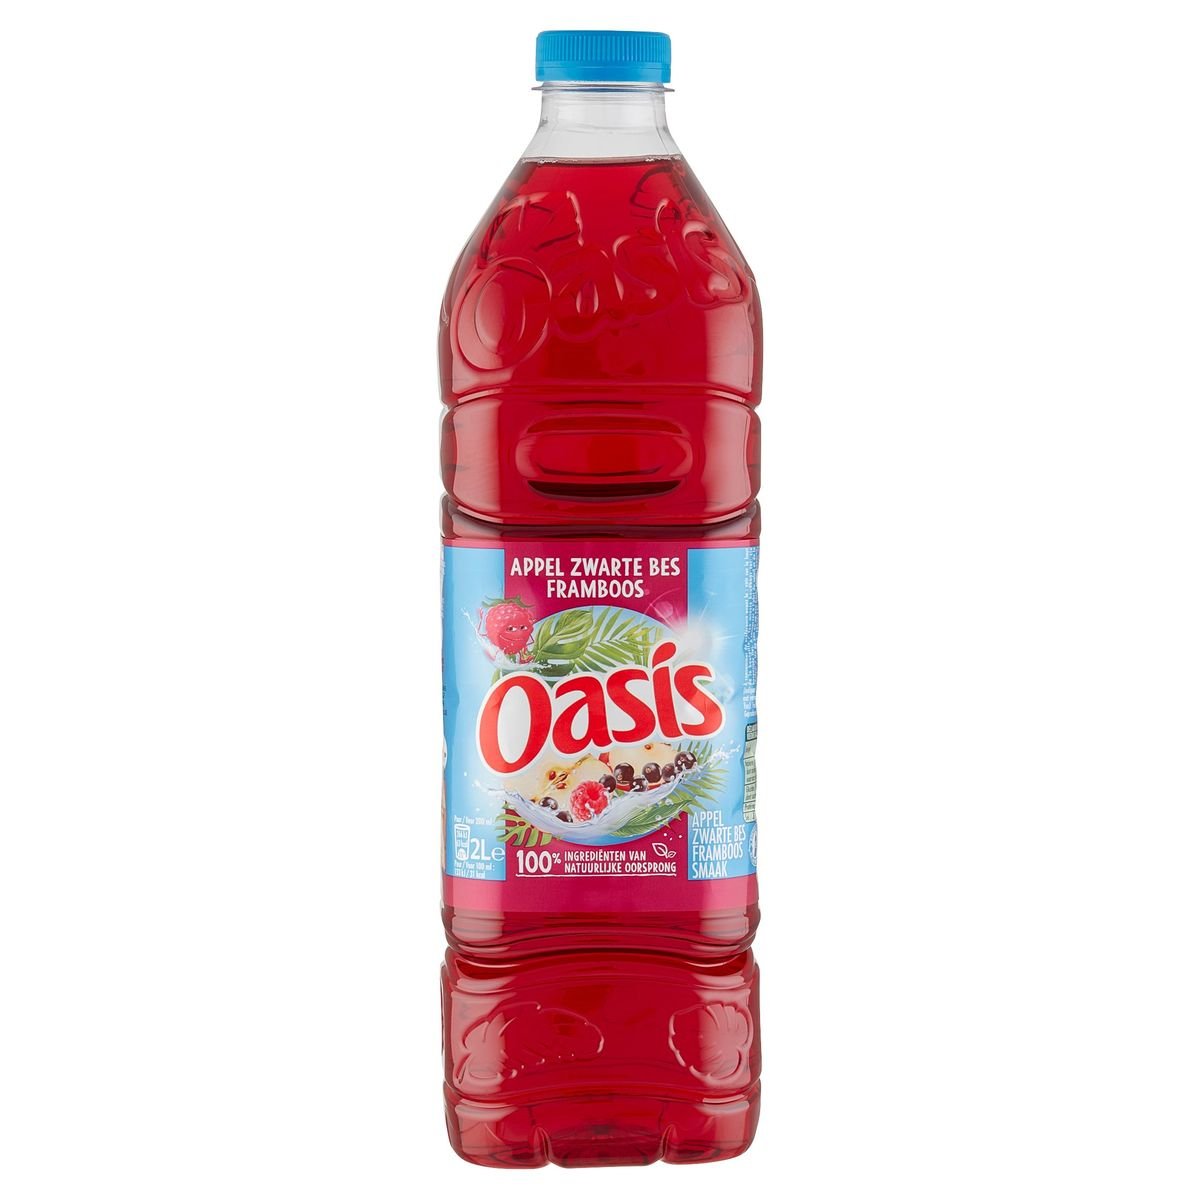 Oasis Pomme Cassis Framboise 2 L